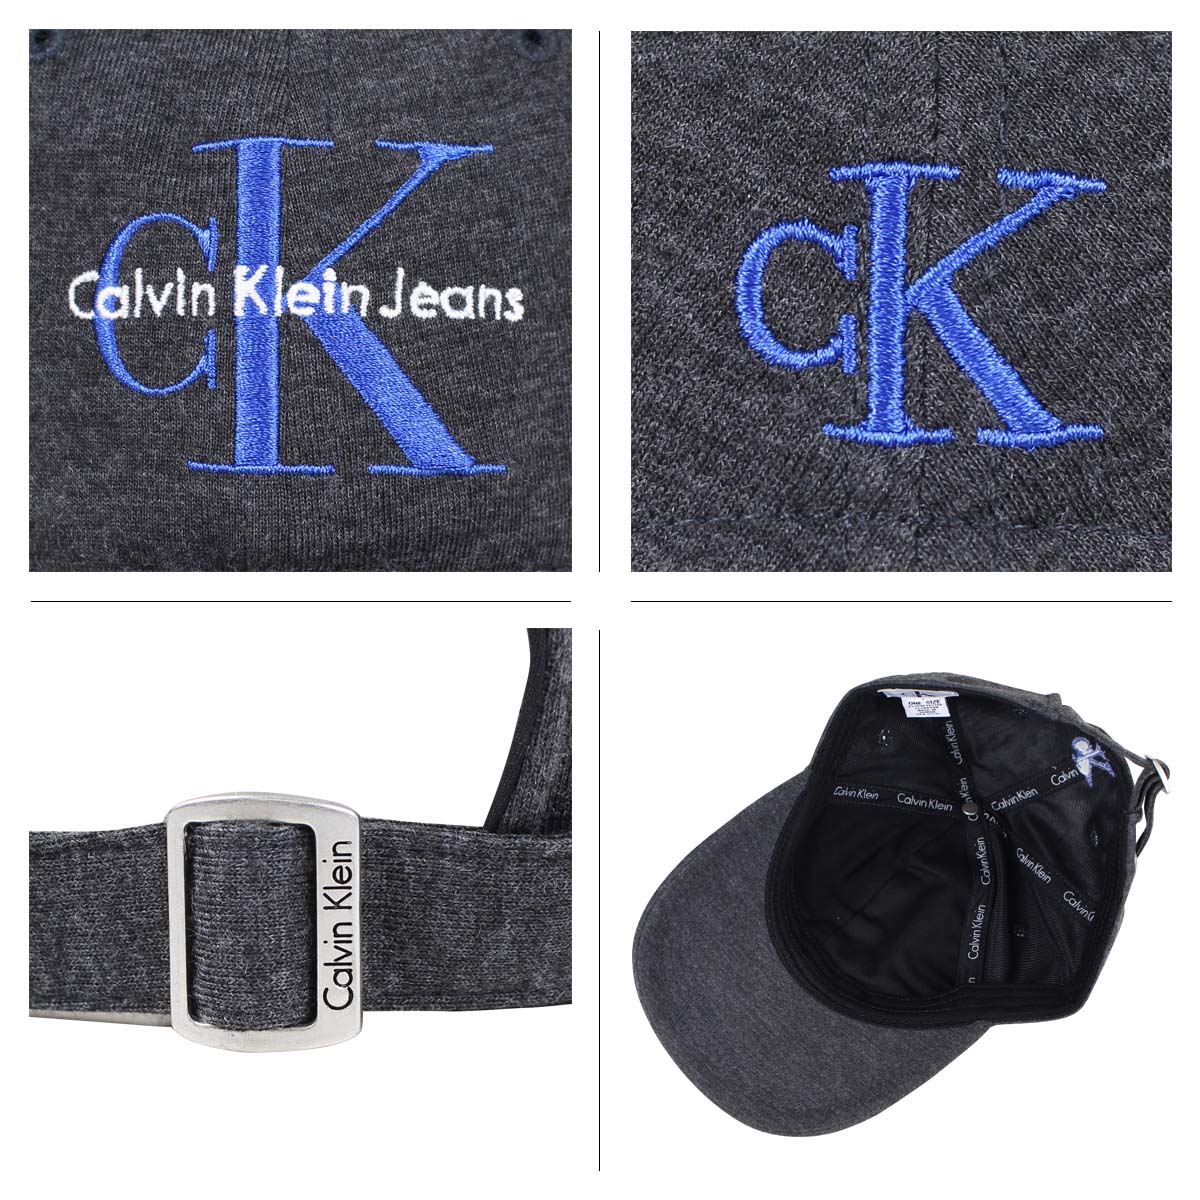 calvin klein jeans quality